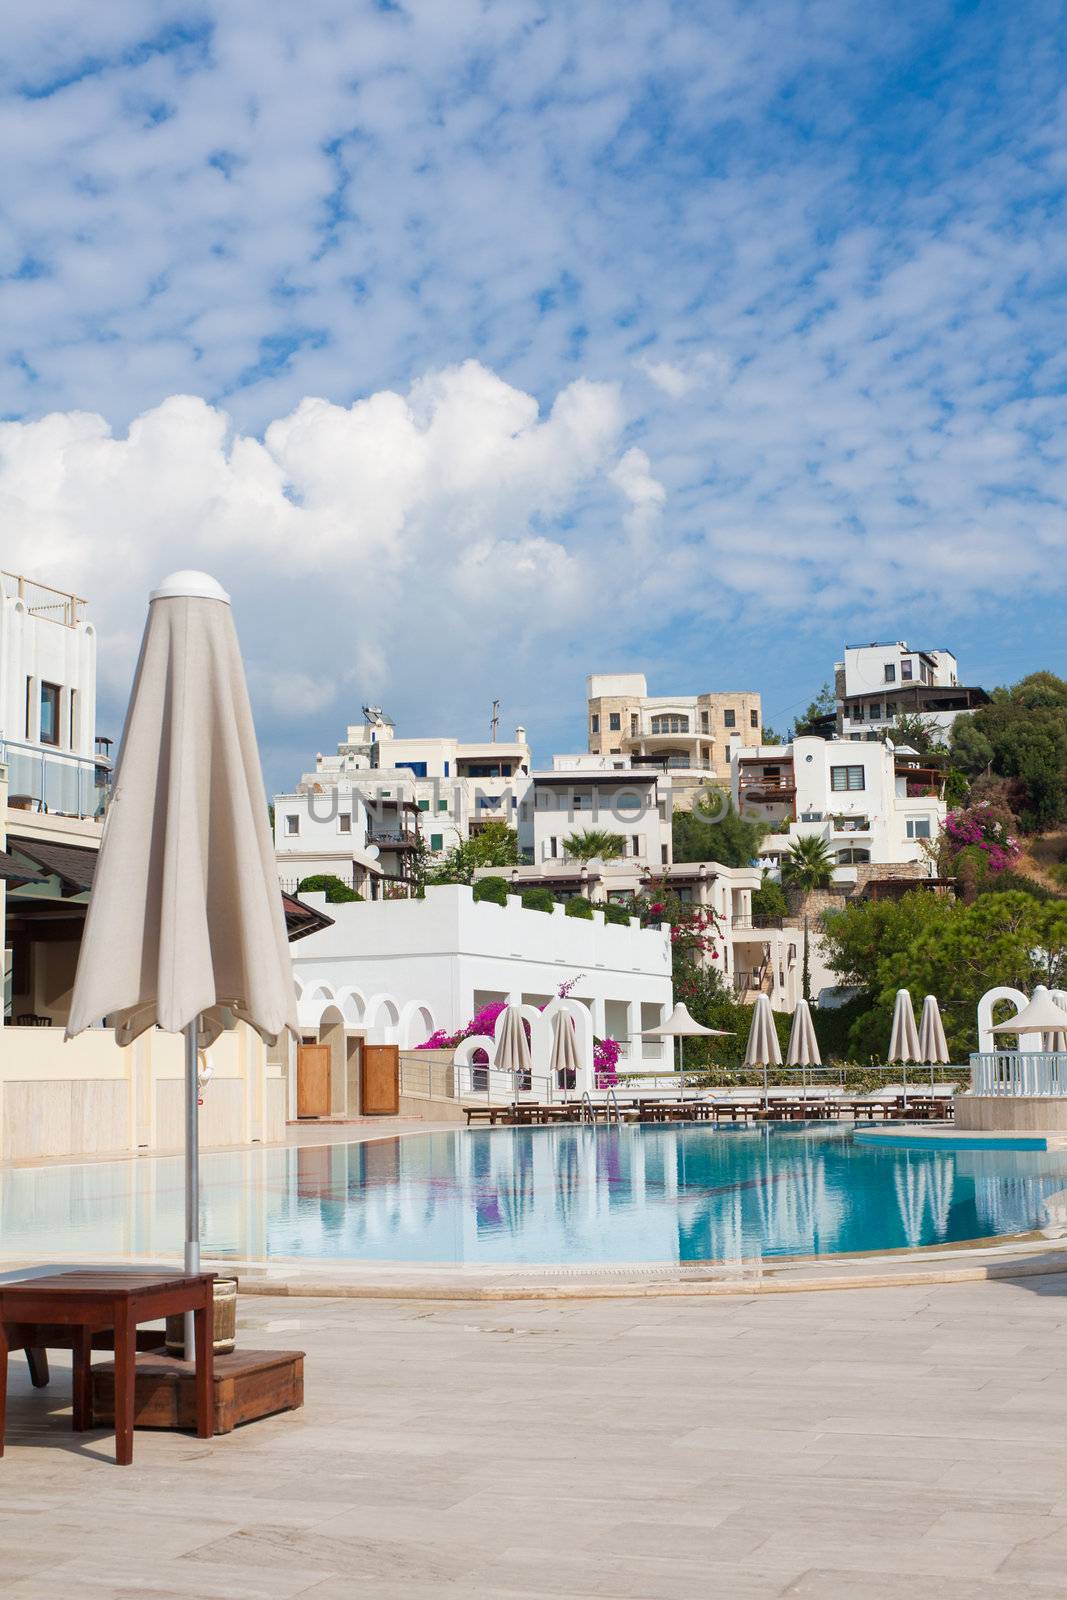 Swimming pool area in a luxury hotel in west Turkey.